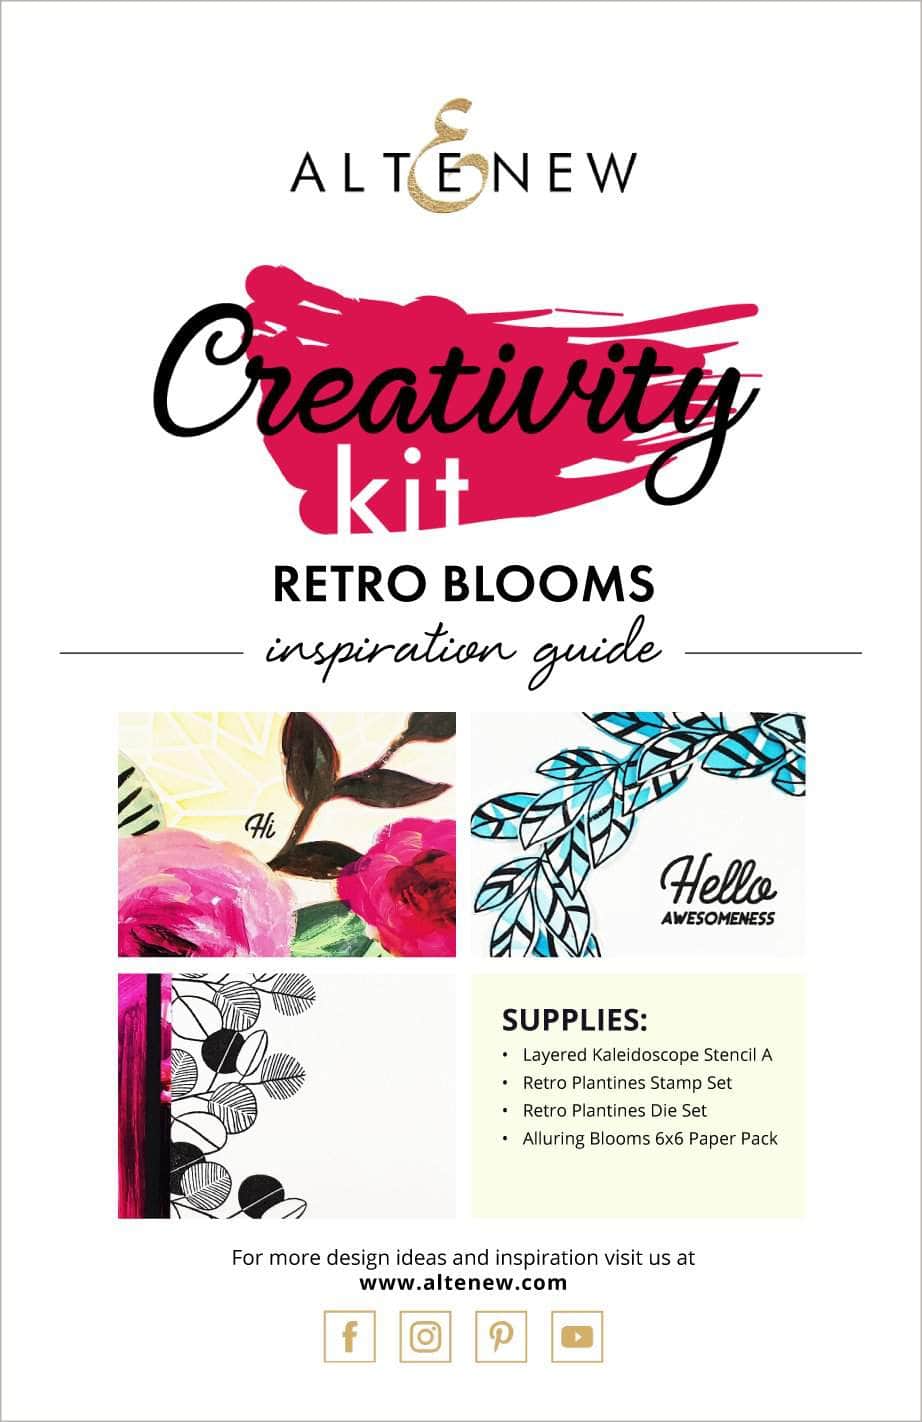 Printed Media Retro Blooms Creativity Kit Inspiration Guide